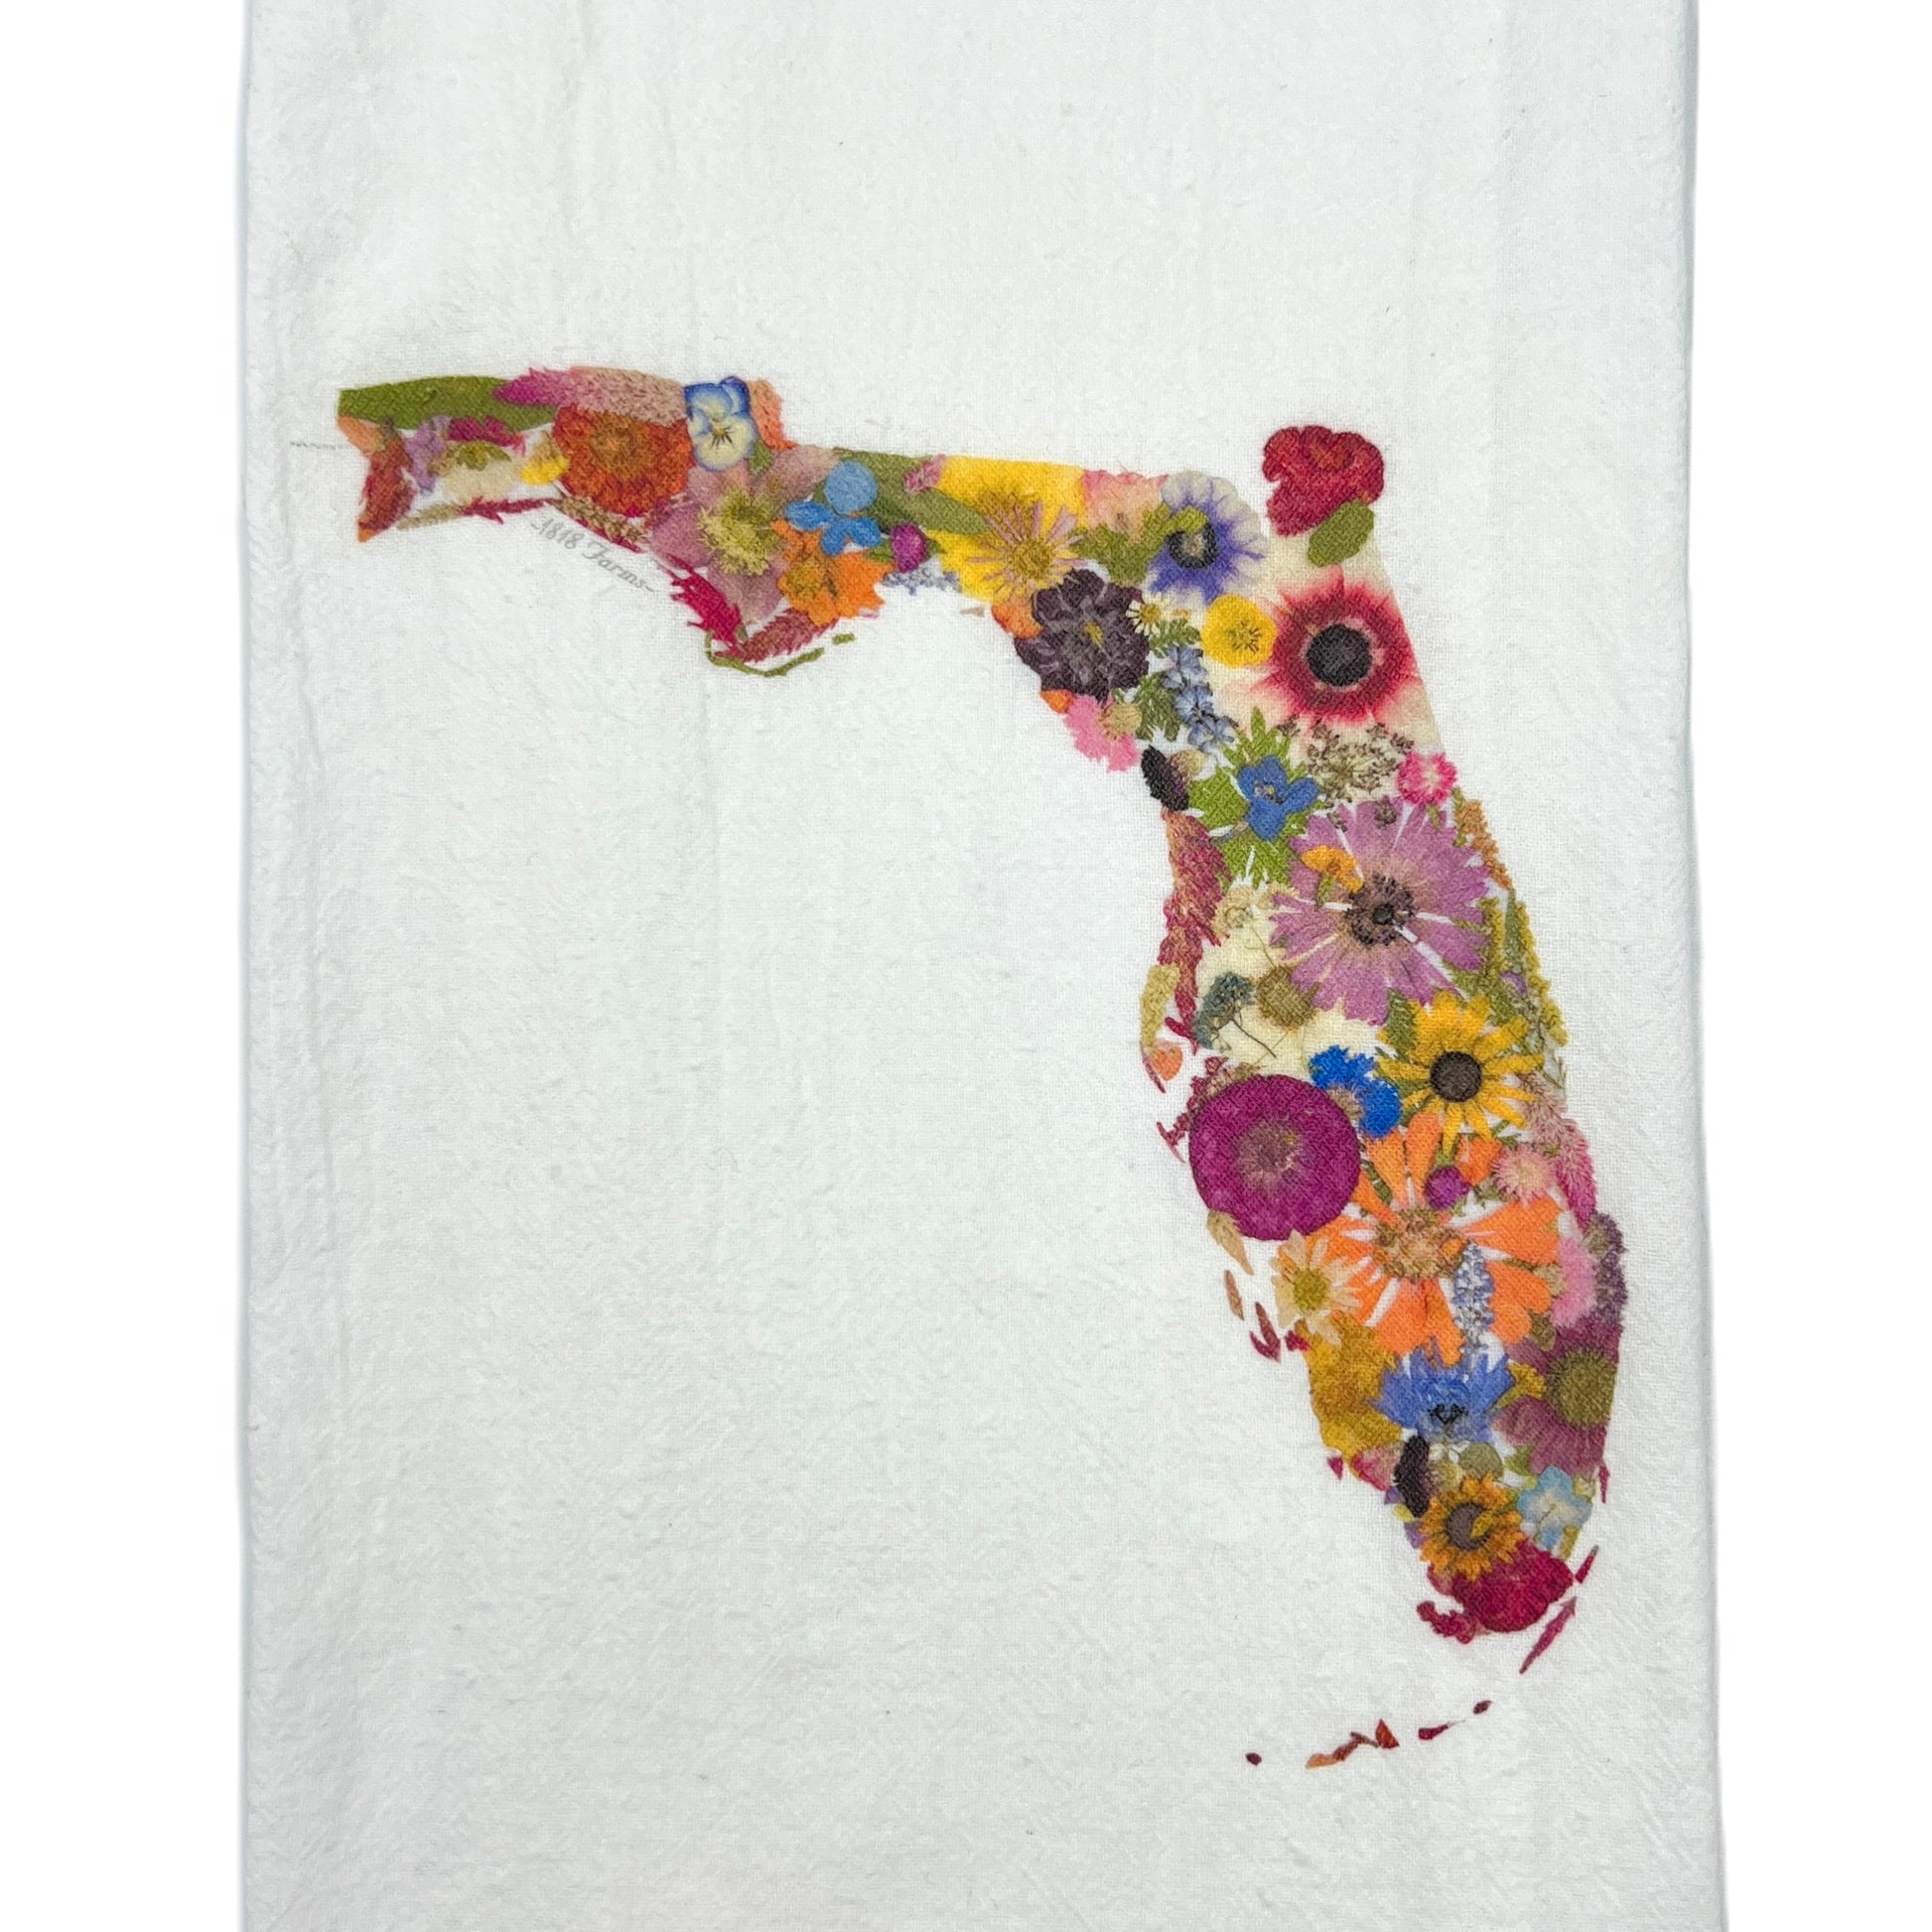 Florida Themed Flour Sack Towel  - "Where I Bloom" Collection Towel 1818 Farms   